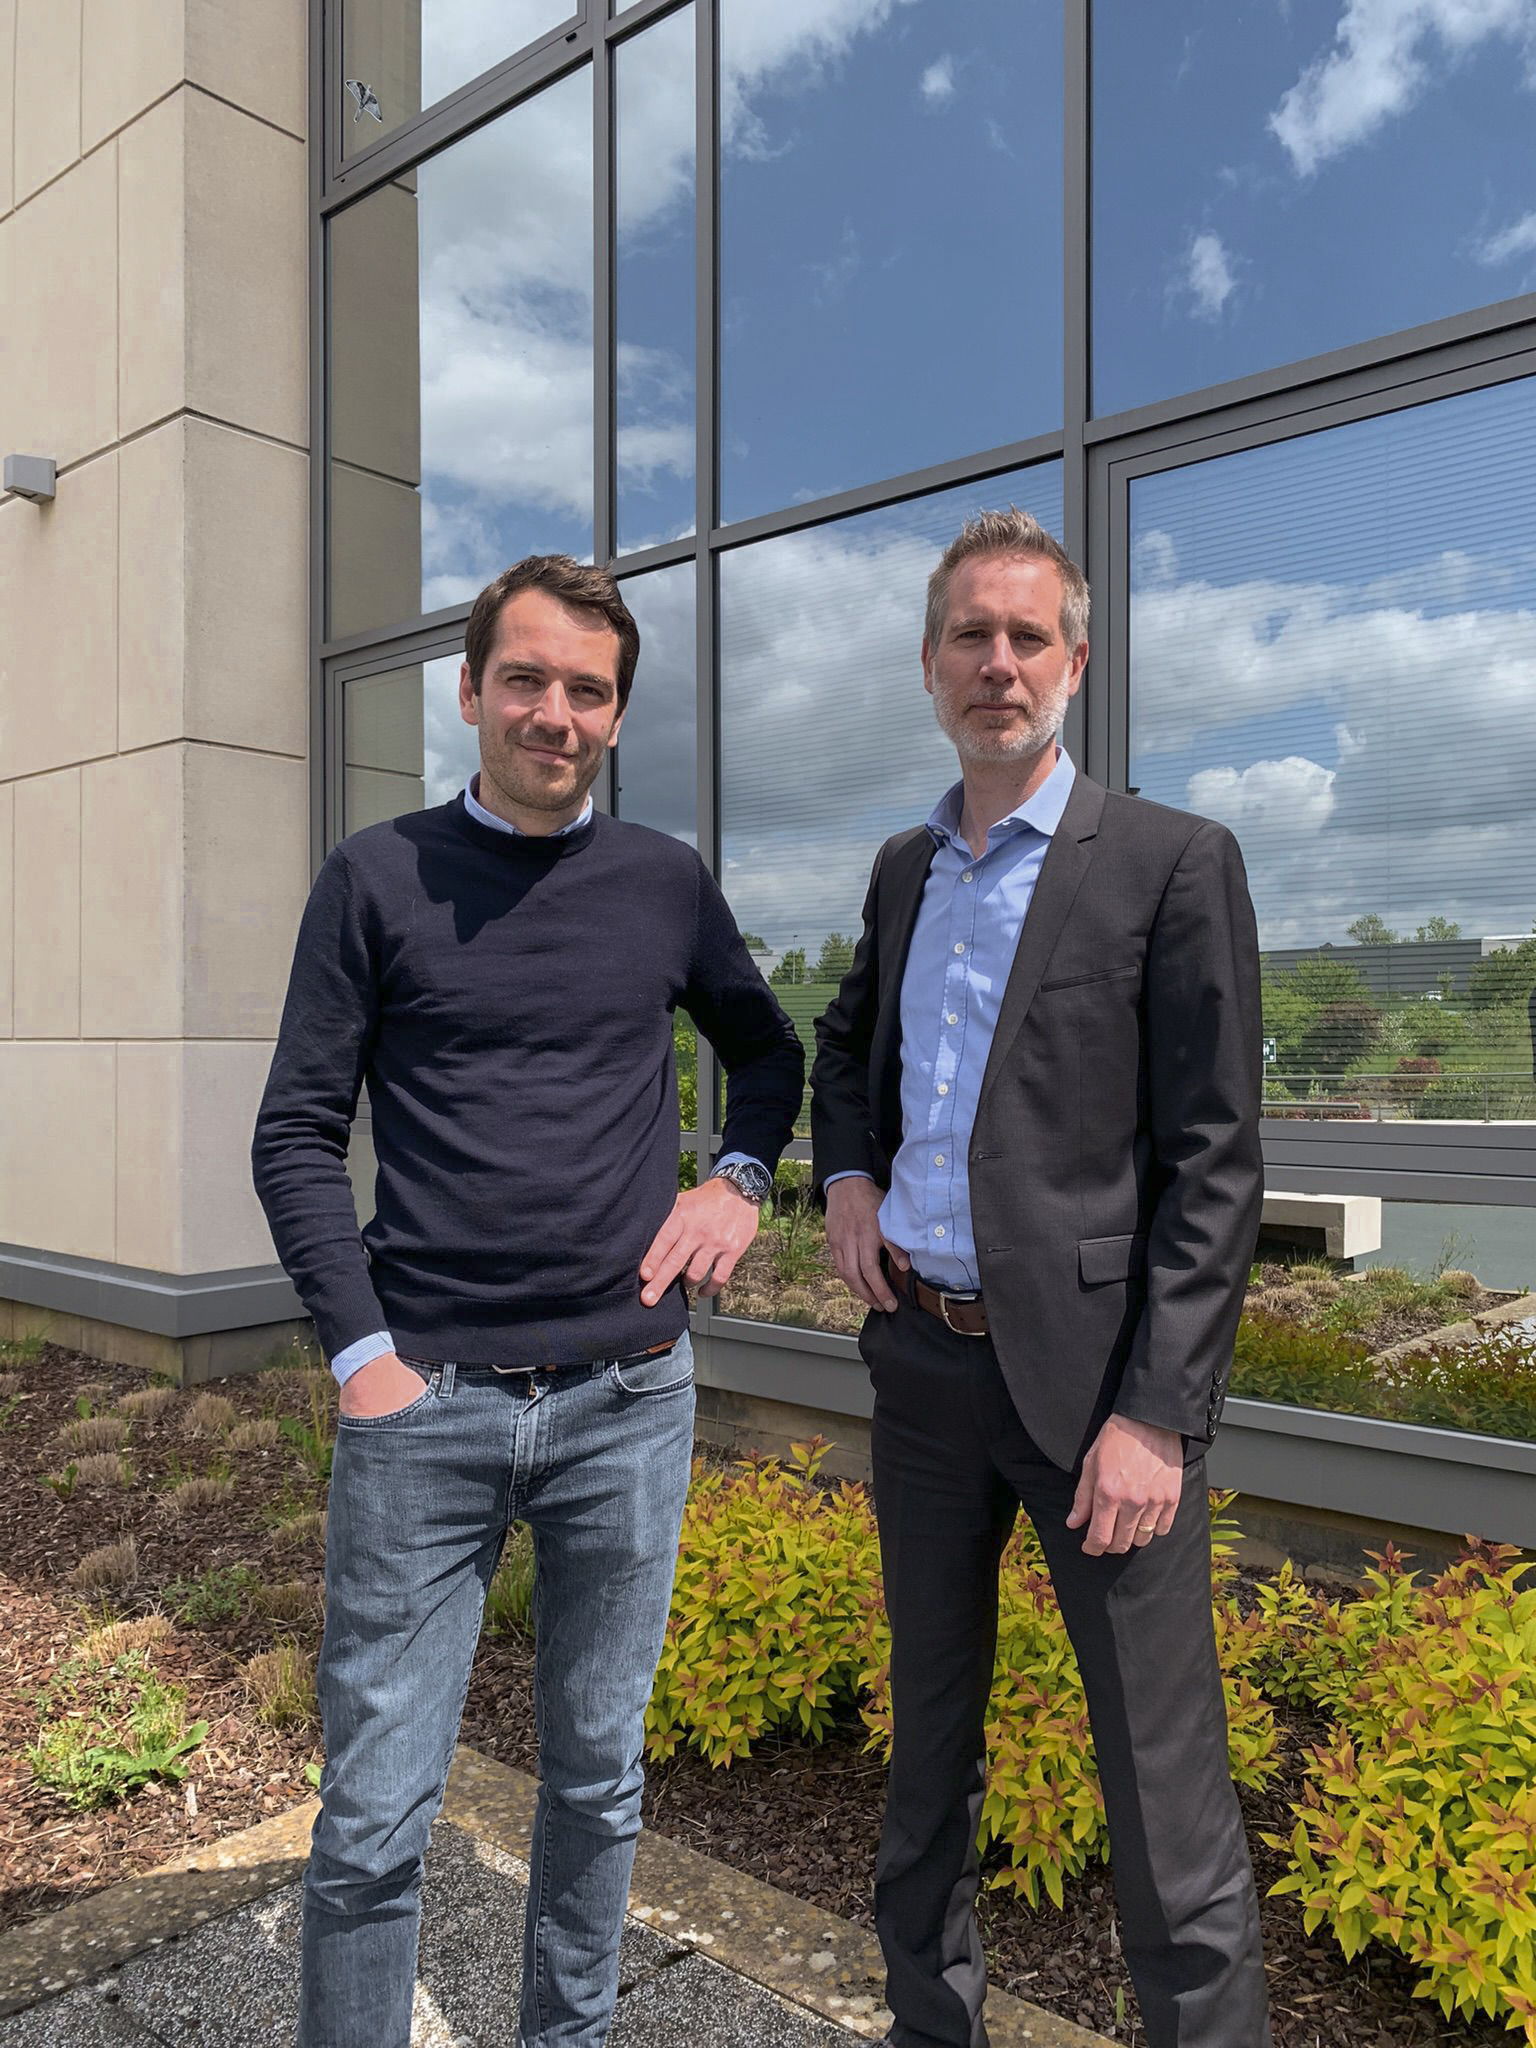 Sébastien Bruyr, Chief Operating Officer van Odoo
en Julien Stocq, Odoo alliance lead bij KPMG in België